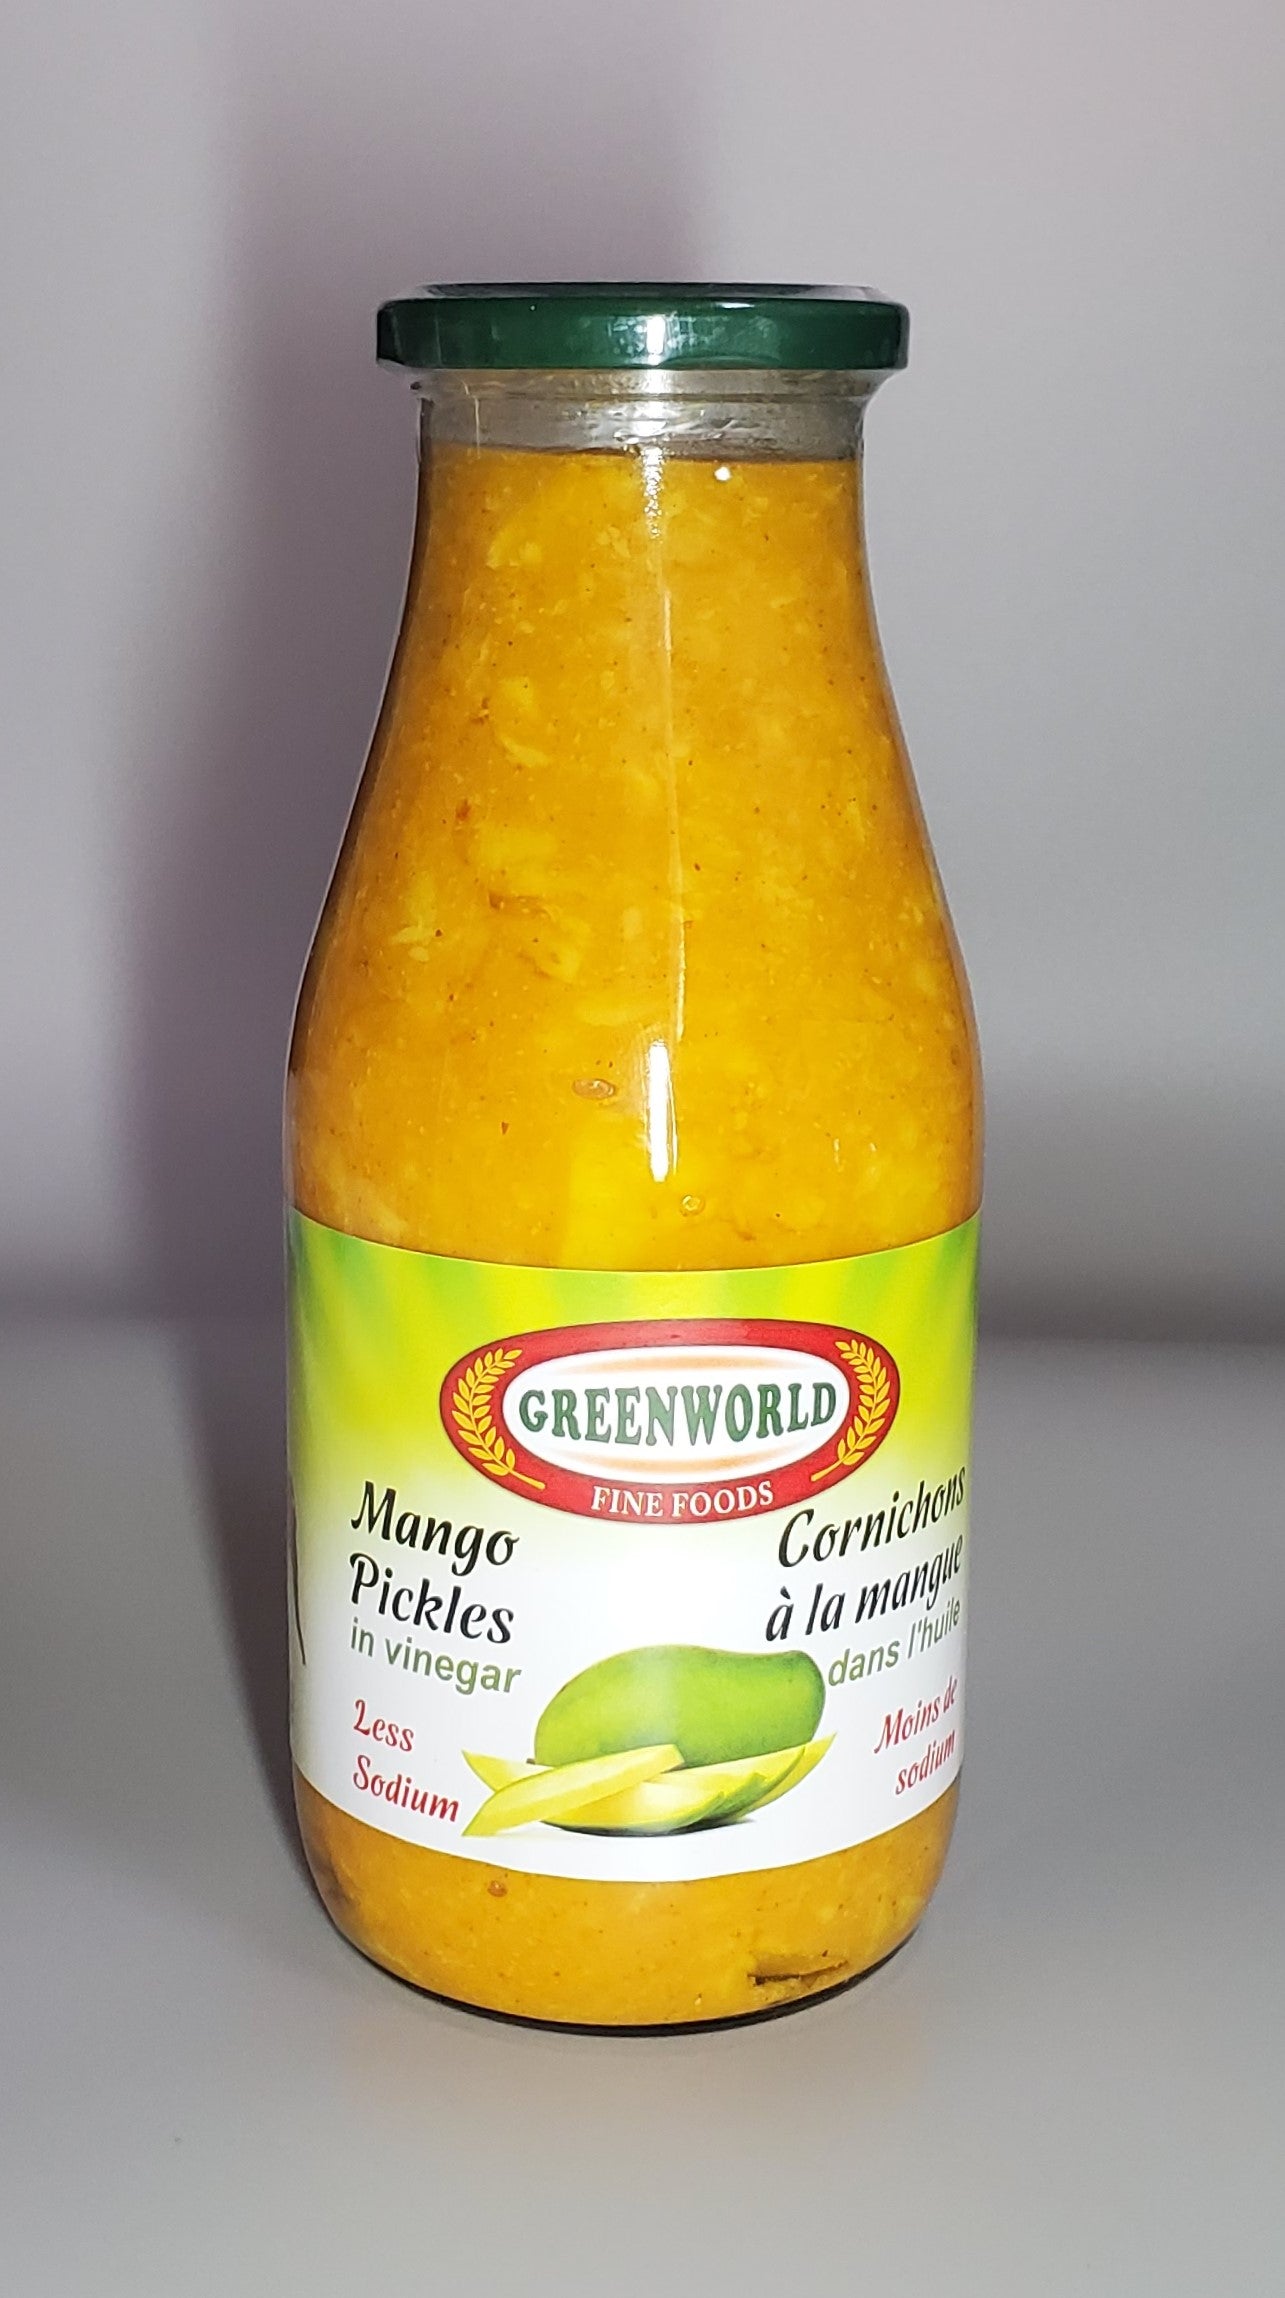 Original Amba Sliced Mango Pickles in Vinegar 1.1 KG less Sodium - cornichons a la mangue Dans l'huile moins de sodium